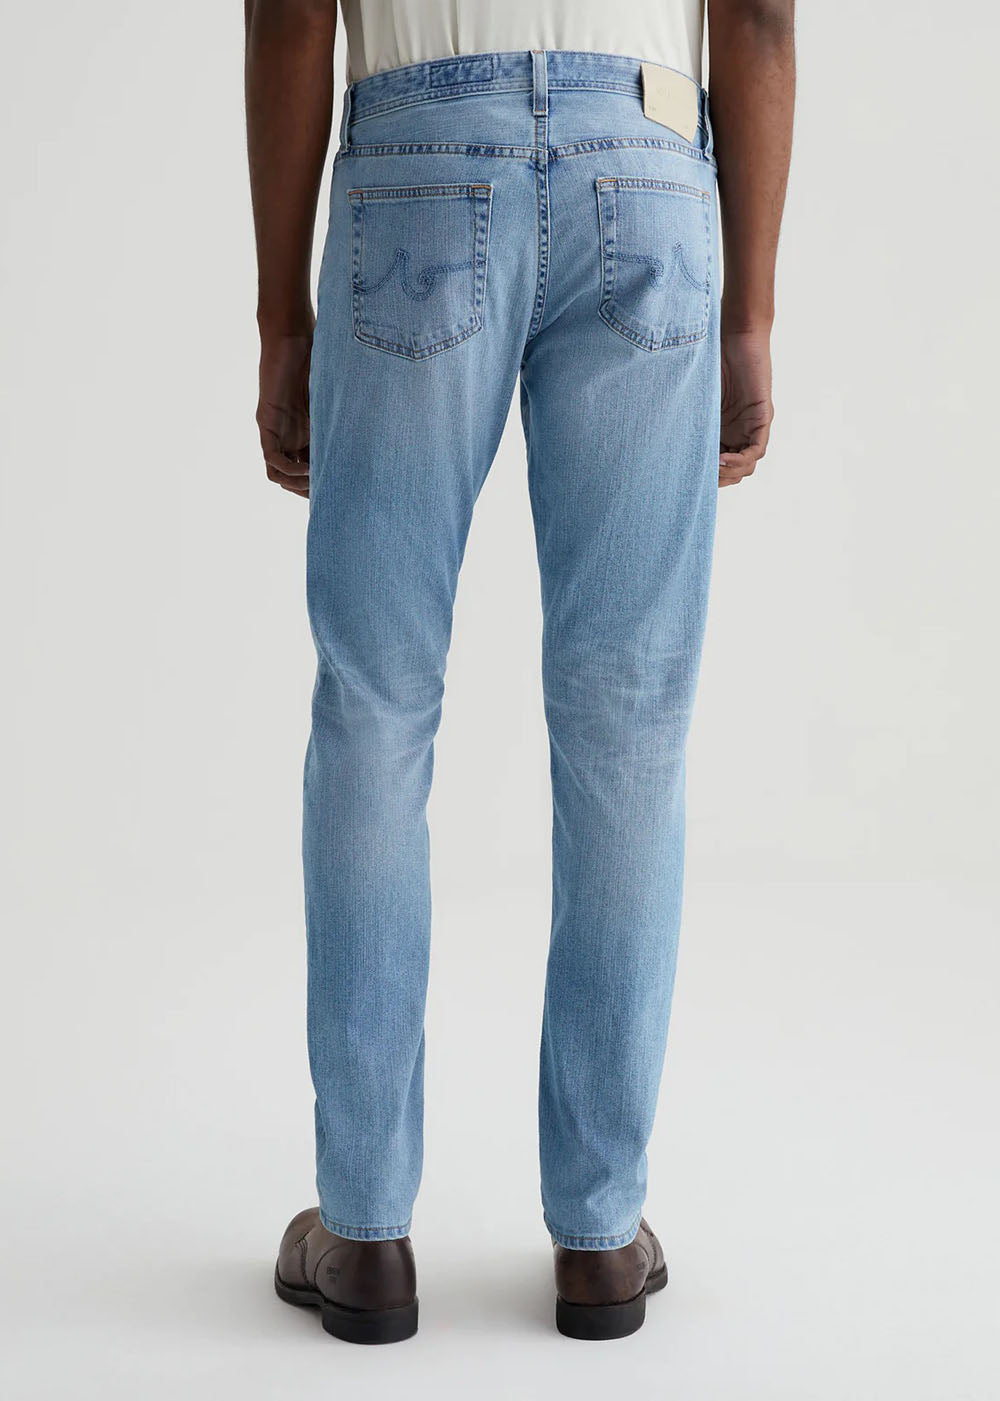 Tellis Modern Slim Jean - 21 Years Wilcox - AG Jeans Canada - Danali - 1783LED21YWCX